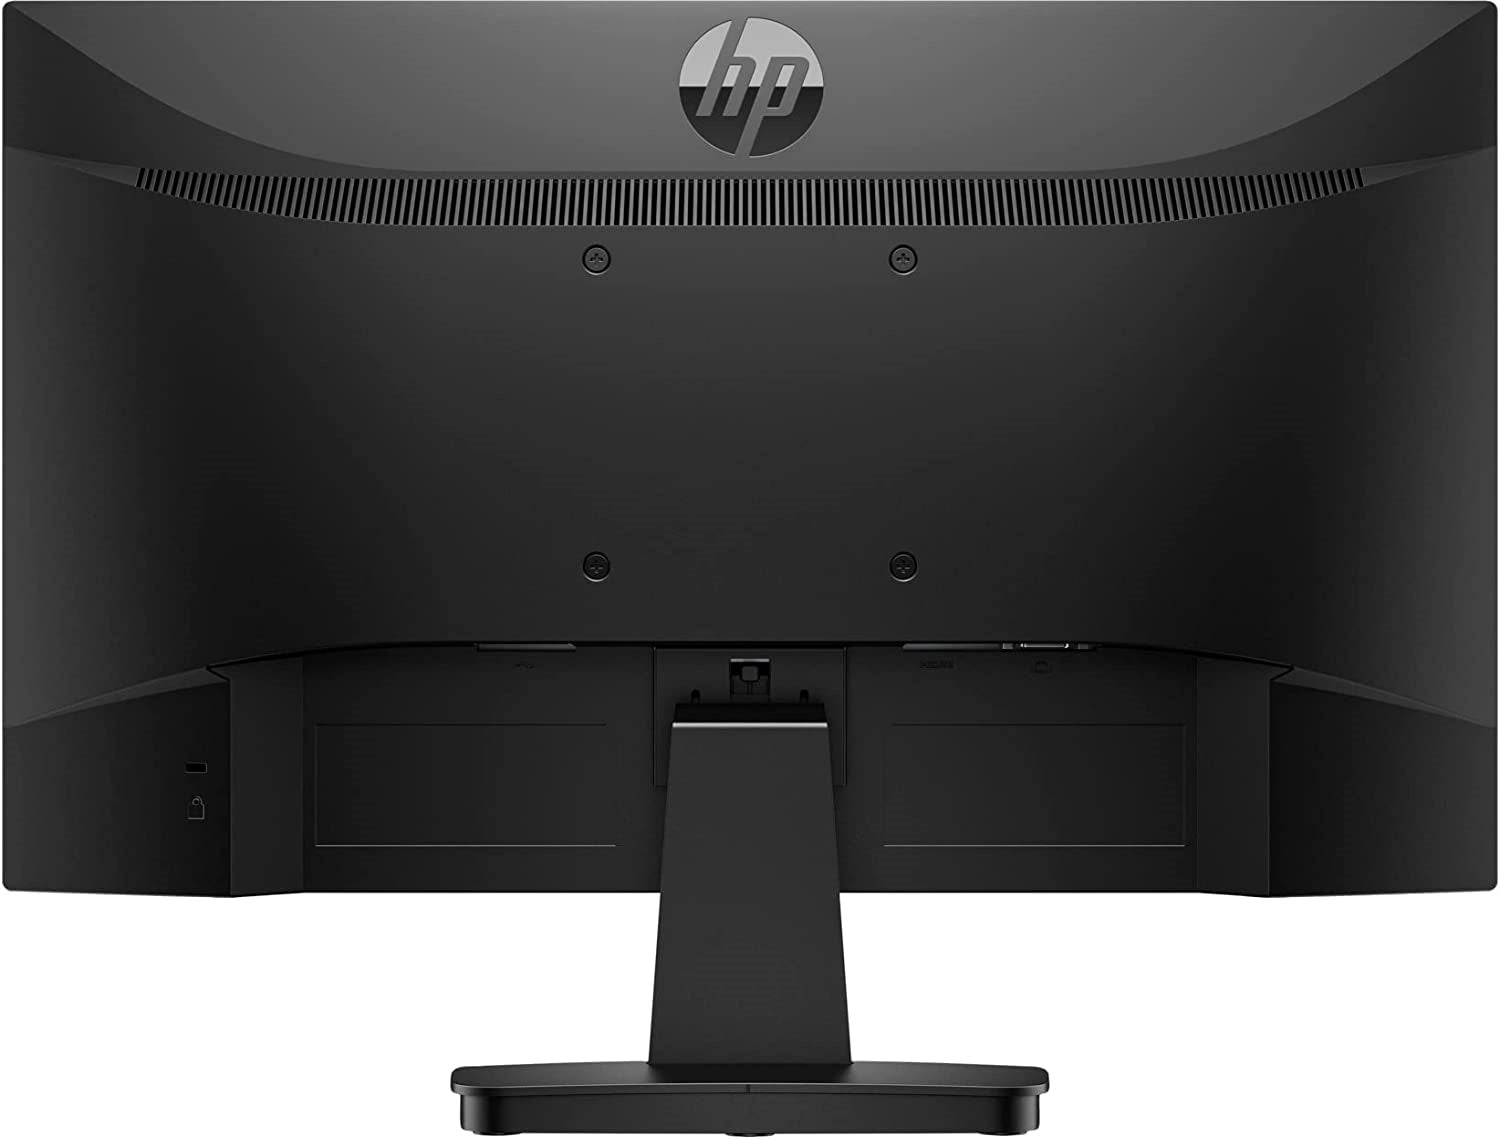 HP P22va G4 21.5 inch 1080P Computer Monitor, Full HD Anti-Glare VA Display, 3000:1 Contrast Ratio, HDMI, VGA, VESA Mount, Low Blue Light Mode, Ideal for Home and Business, Black (2022 Latest Model)